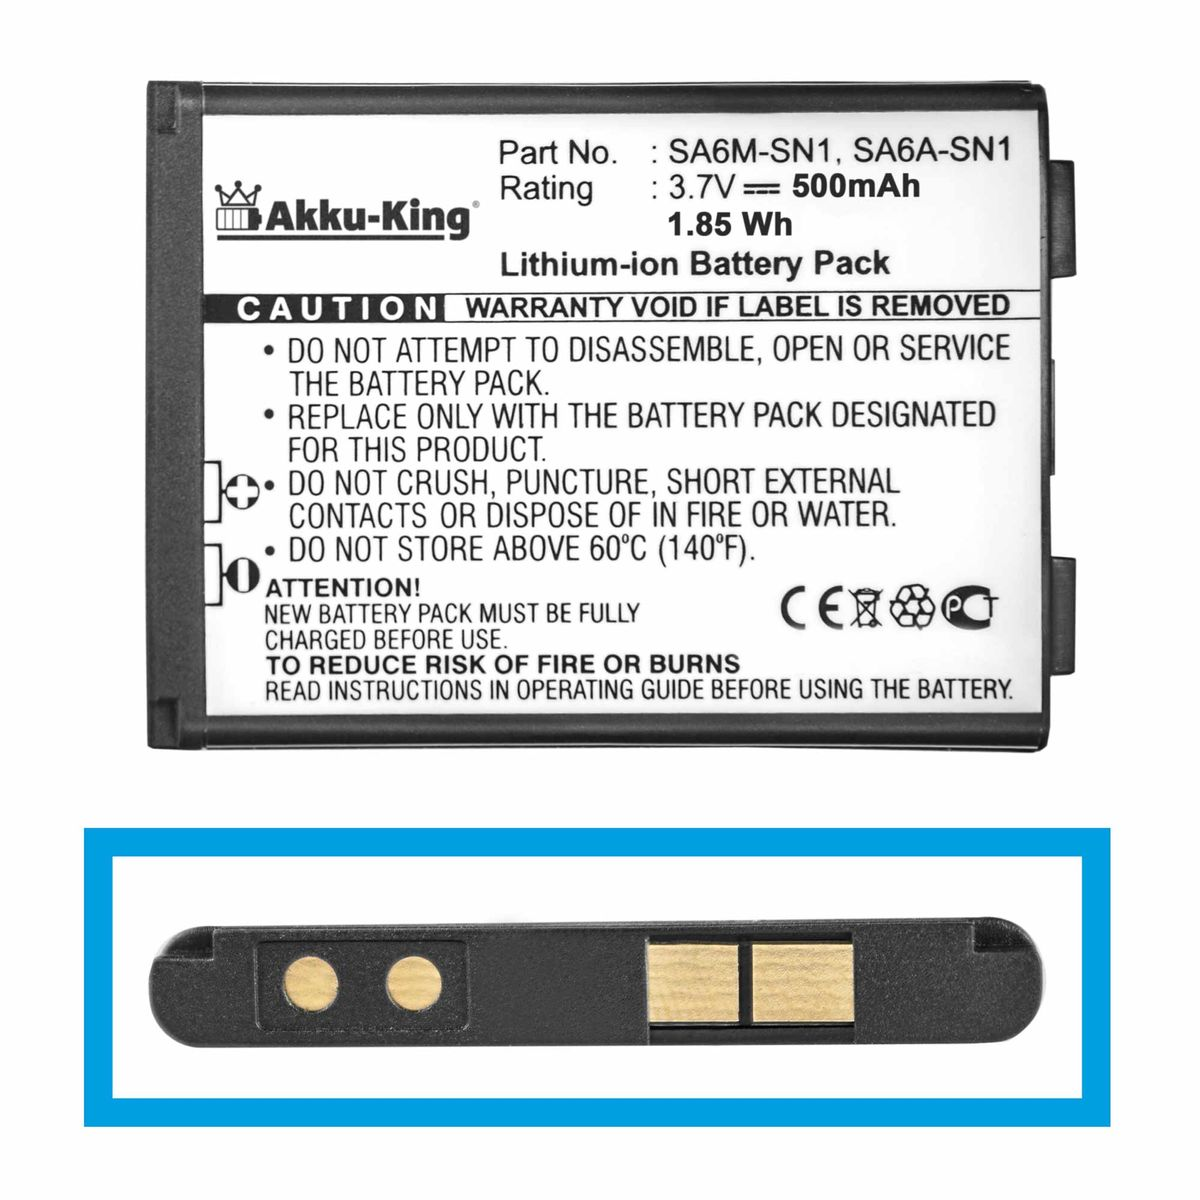 kompatibel 3.7 Akku AKKU-KING Handy-Akku, Li-Ion mit 500mAh Volt, Sagem SA8A-SN5